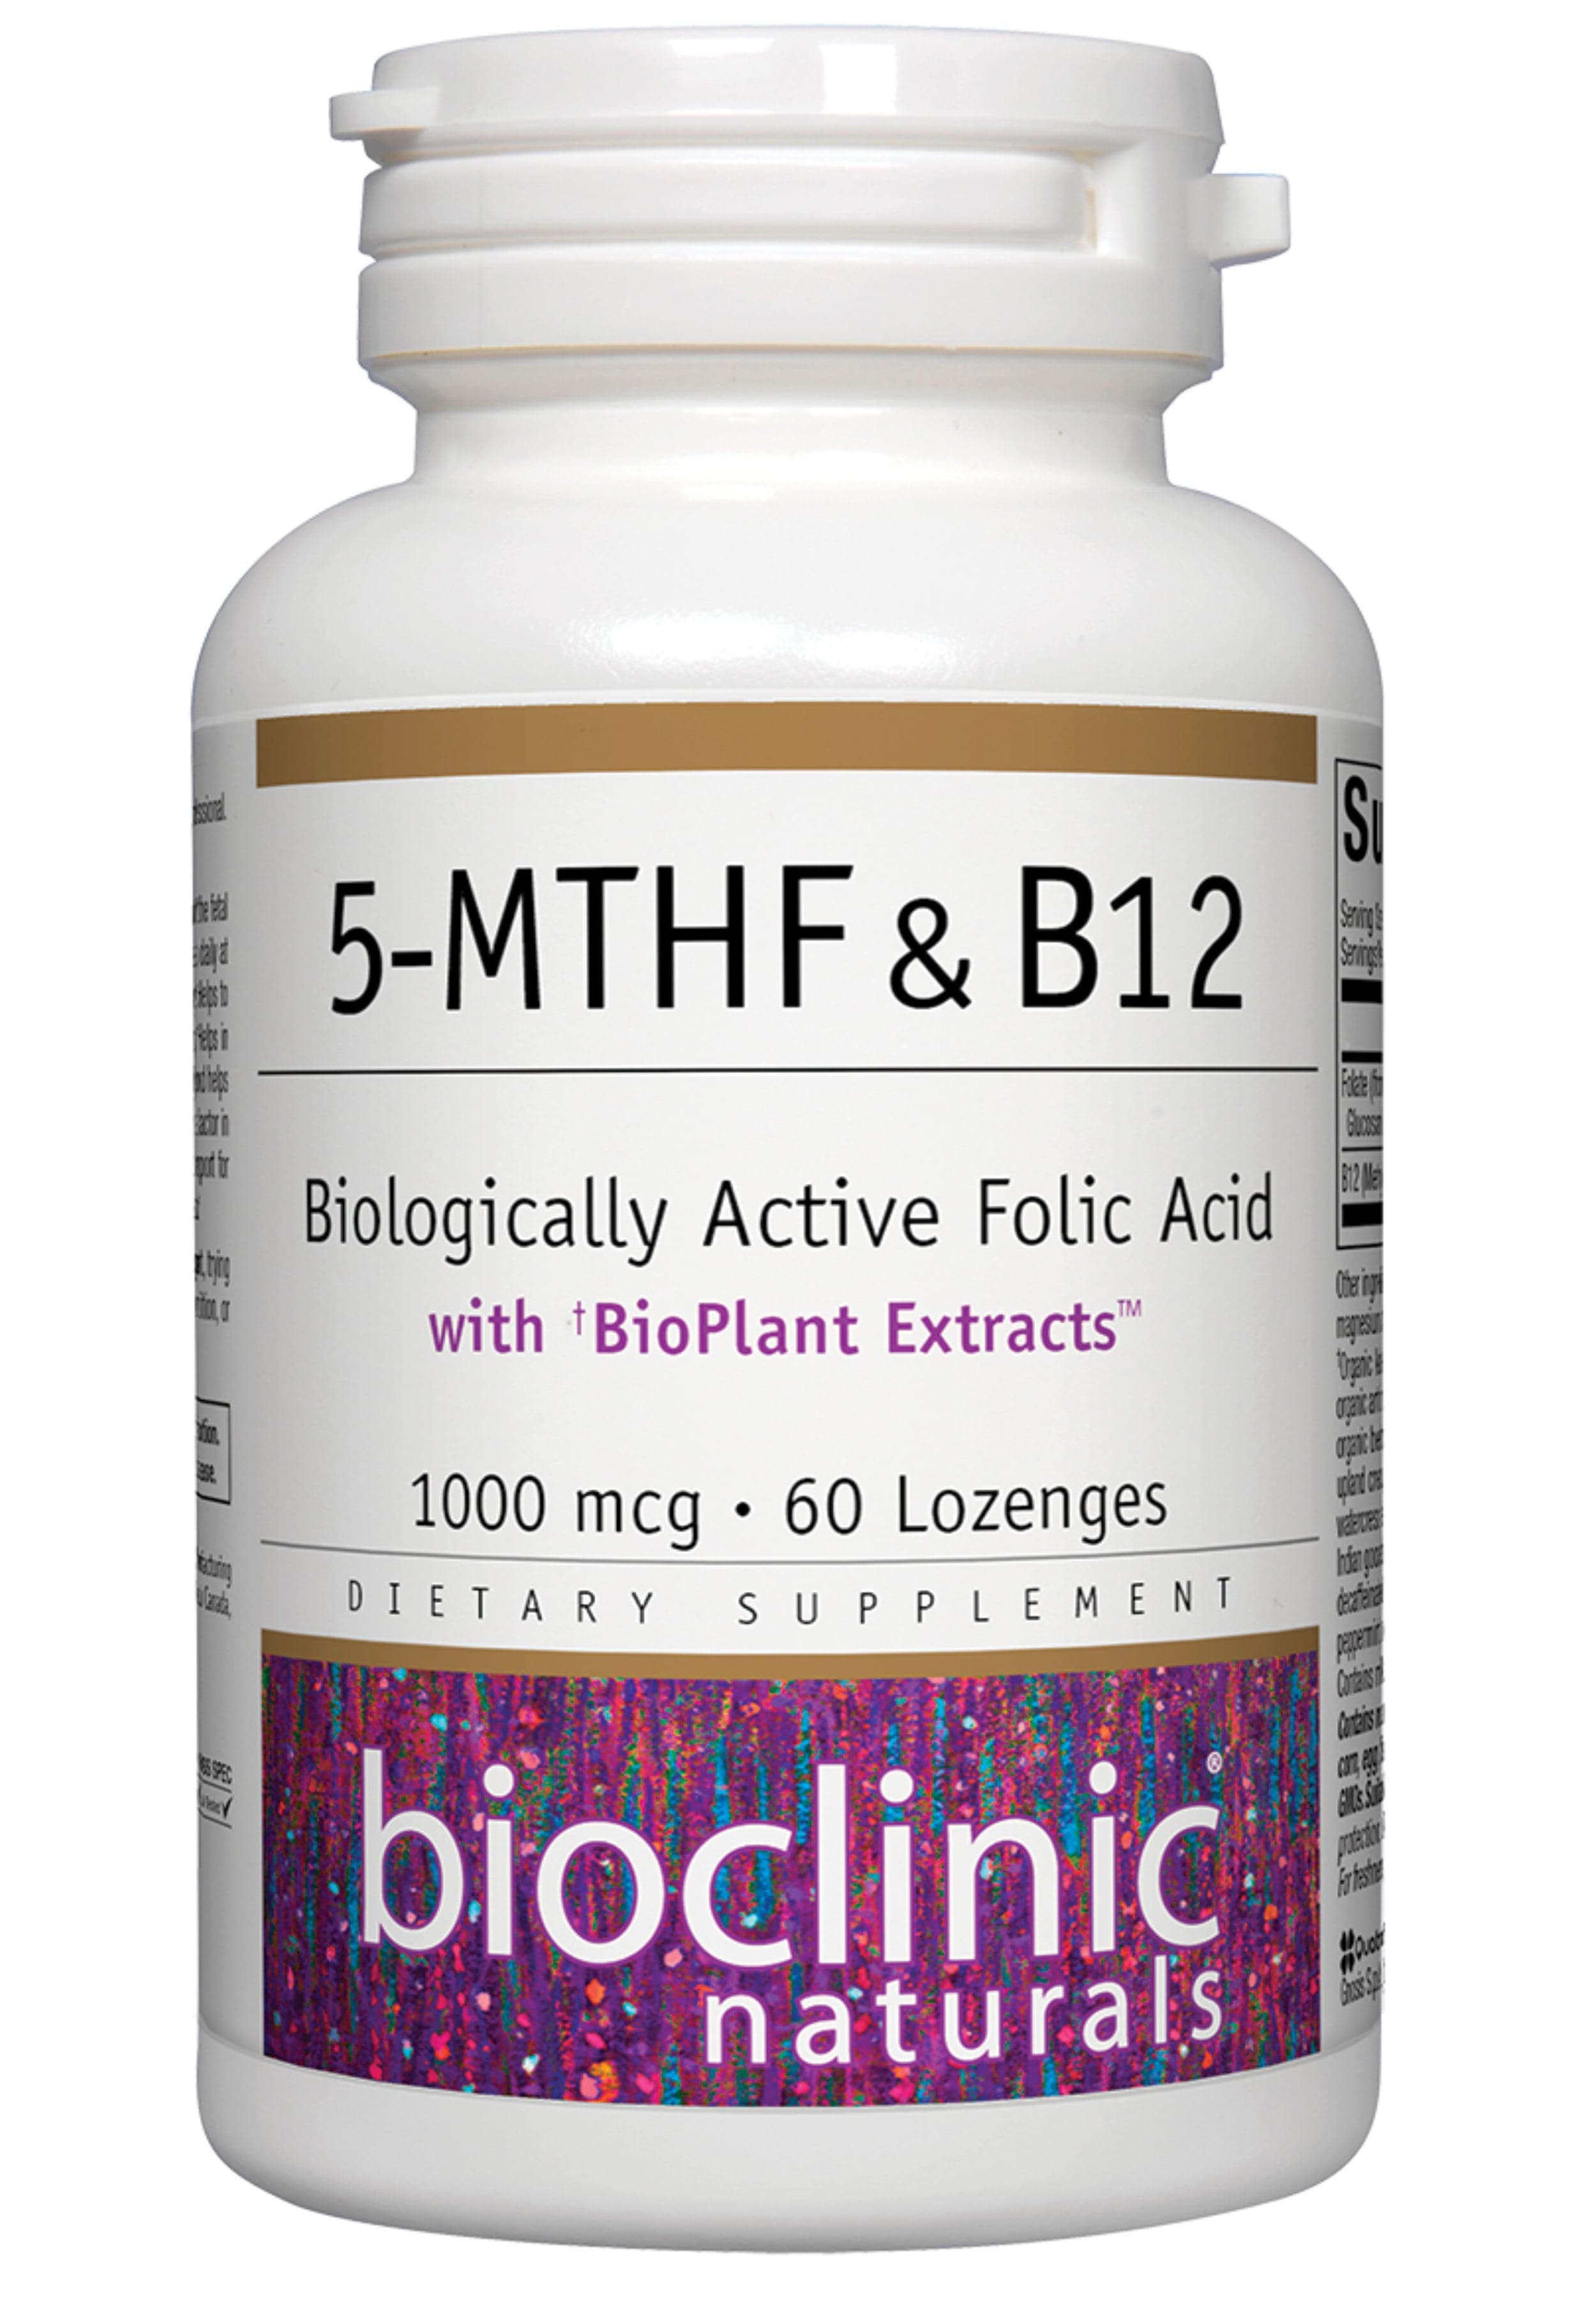 Bioclinic Naturals 5-MTHF and B12